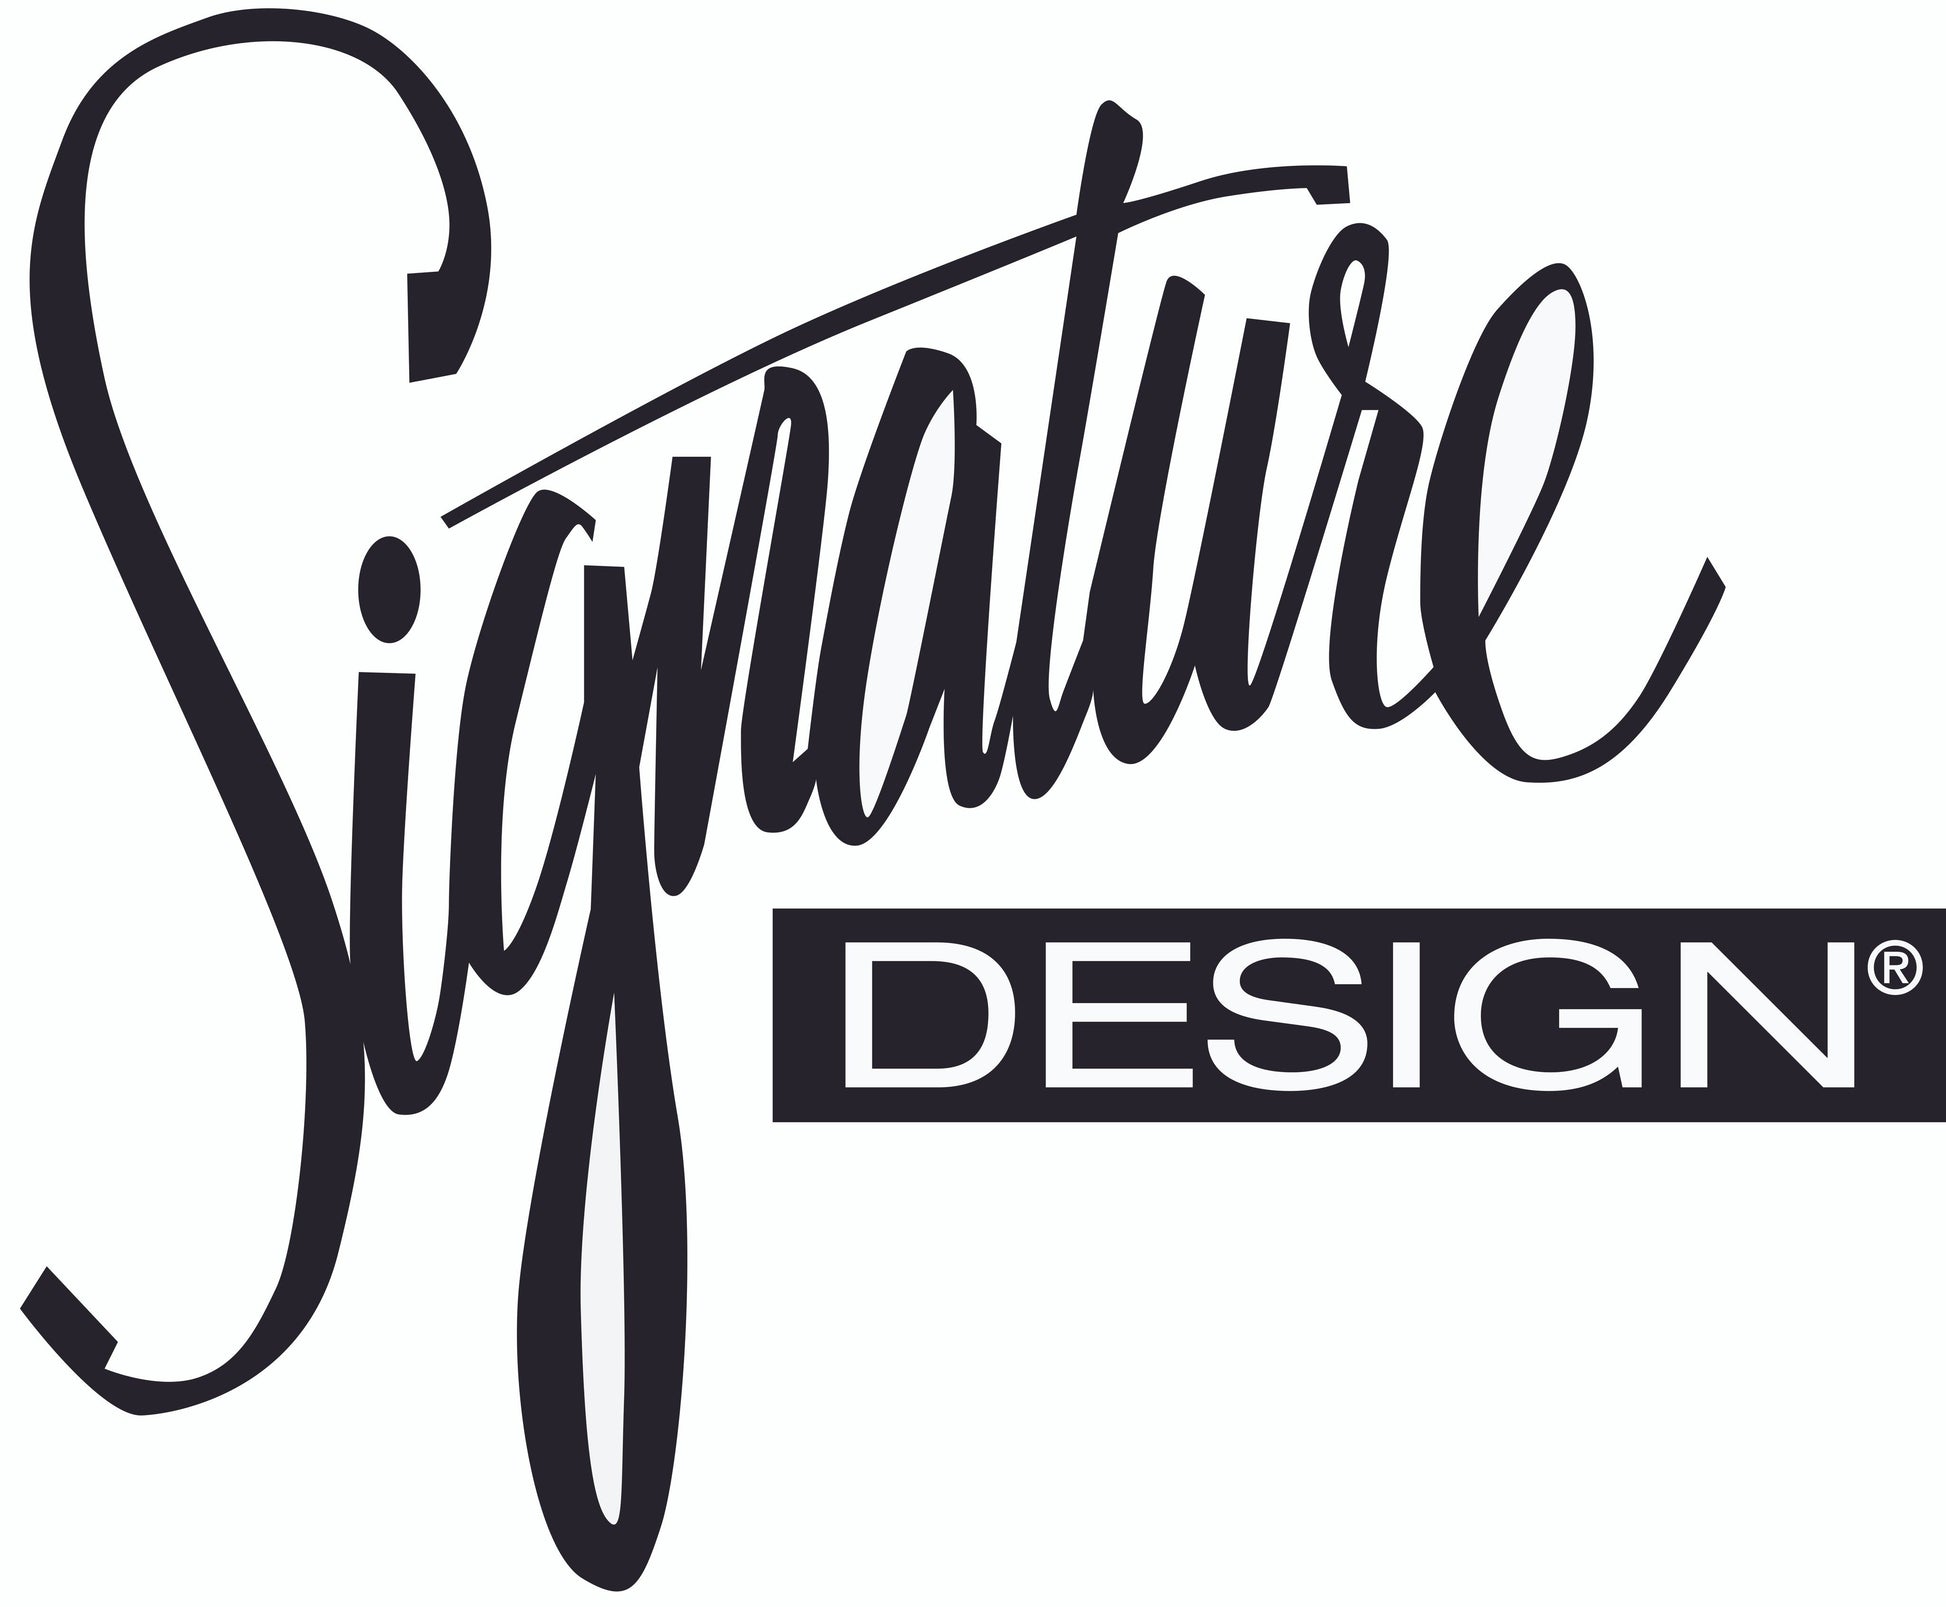 Nanforth Dresser and Mirror Signature Design by Ashley®